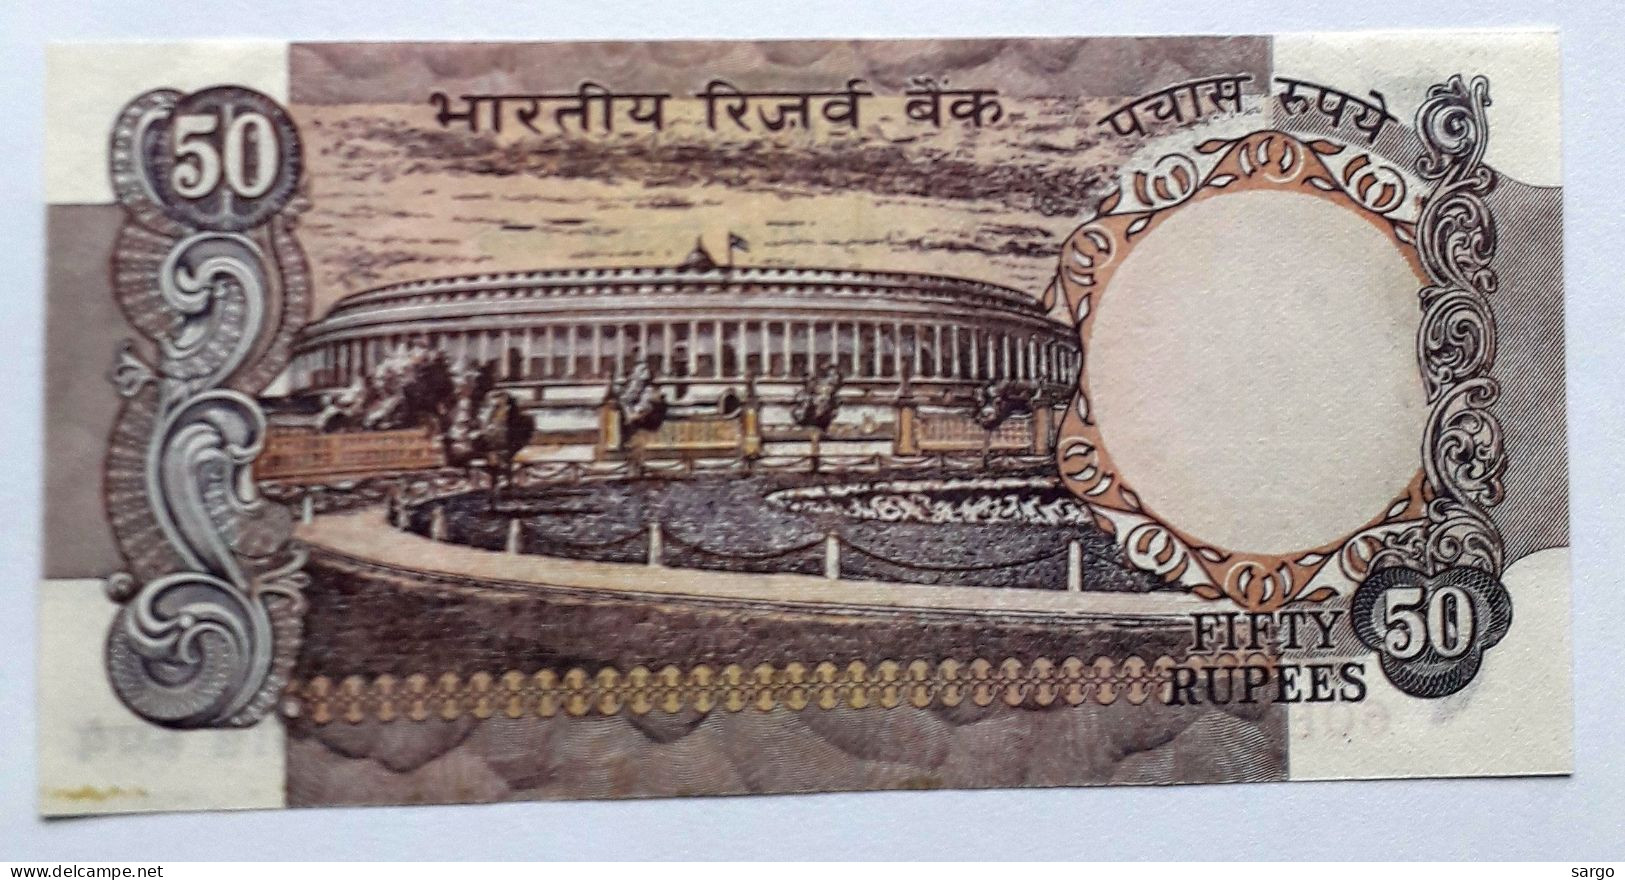 INDIA - 50 RUPEES - P 84 K (1978-1997) - UNC - BANKNOTES - PAPER MONEY - CARTAMONETA - - Inde